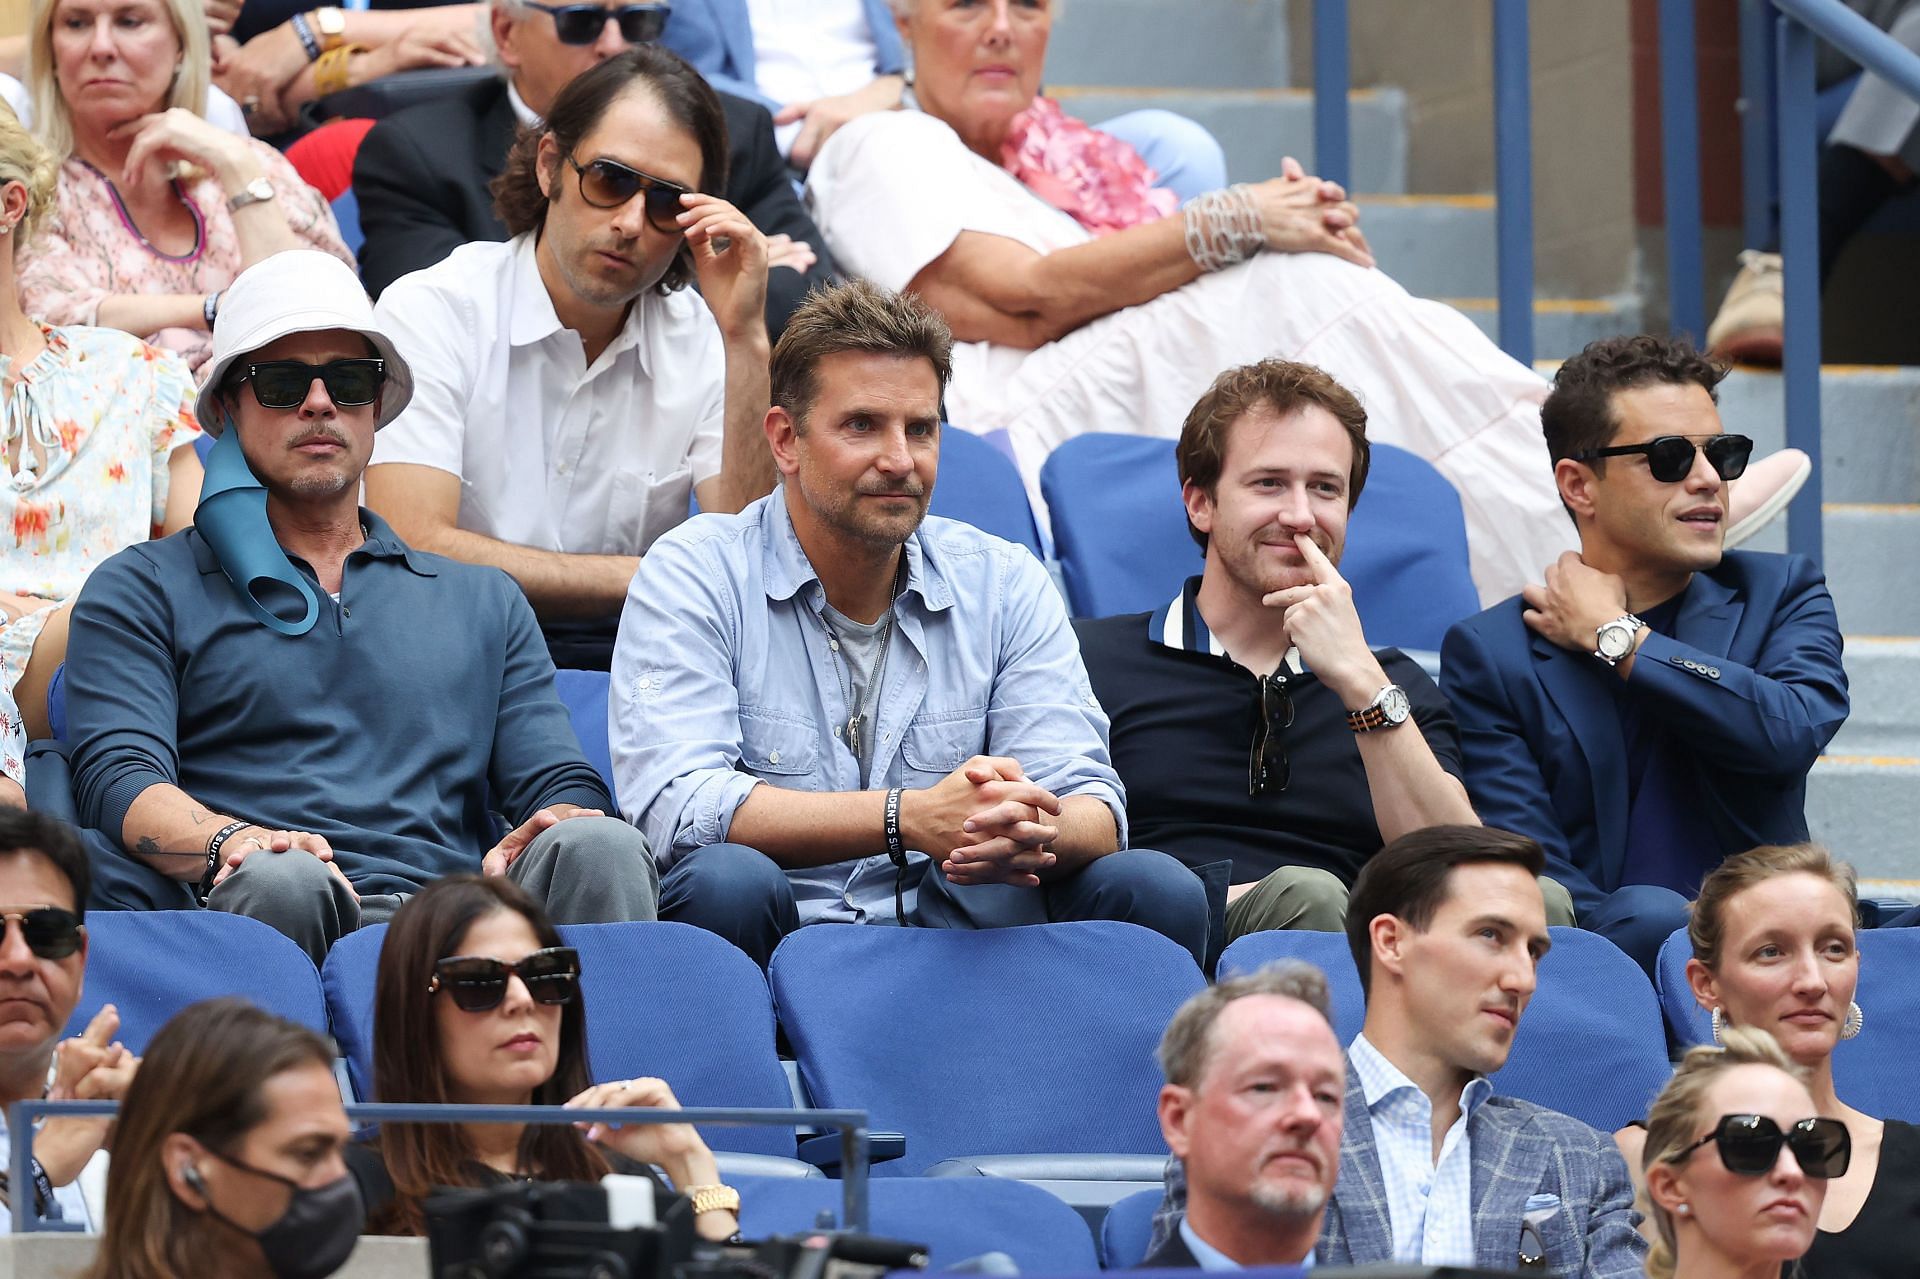 (From L-R) Brad Pitt, Bradley Cooper, Joseph Mazzello, and Rami Malek watch the US Open final between Daniil Medvedev and Novak Djokovic